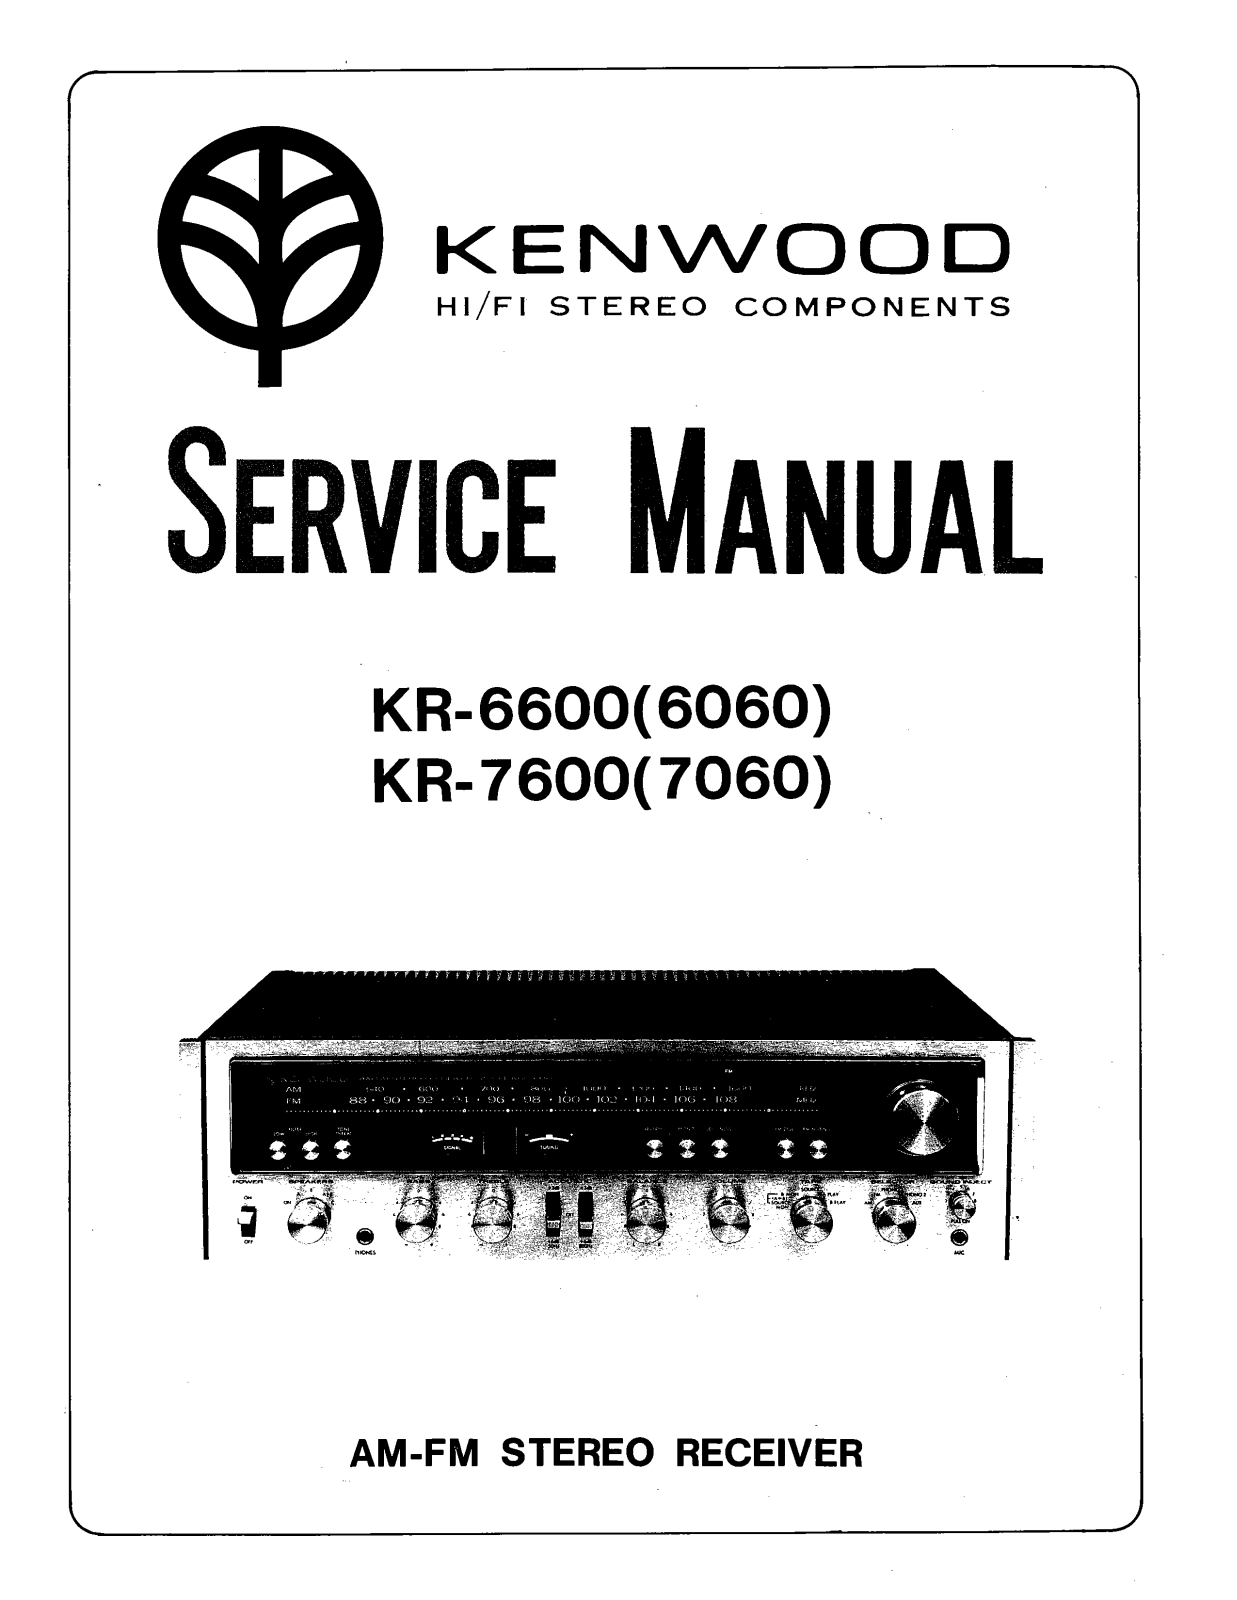 Kenwood kr 6060, kr 6600, kr 7060, kr 7600 Service Manual